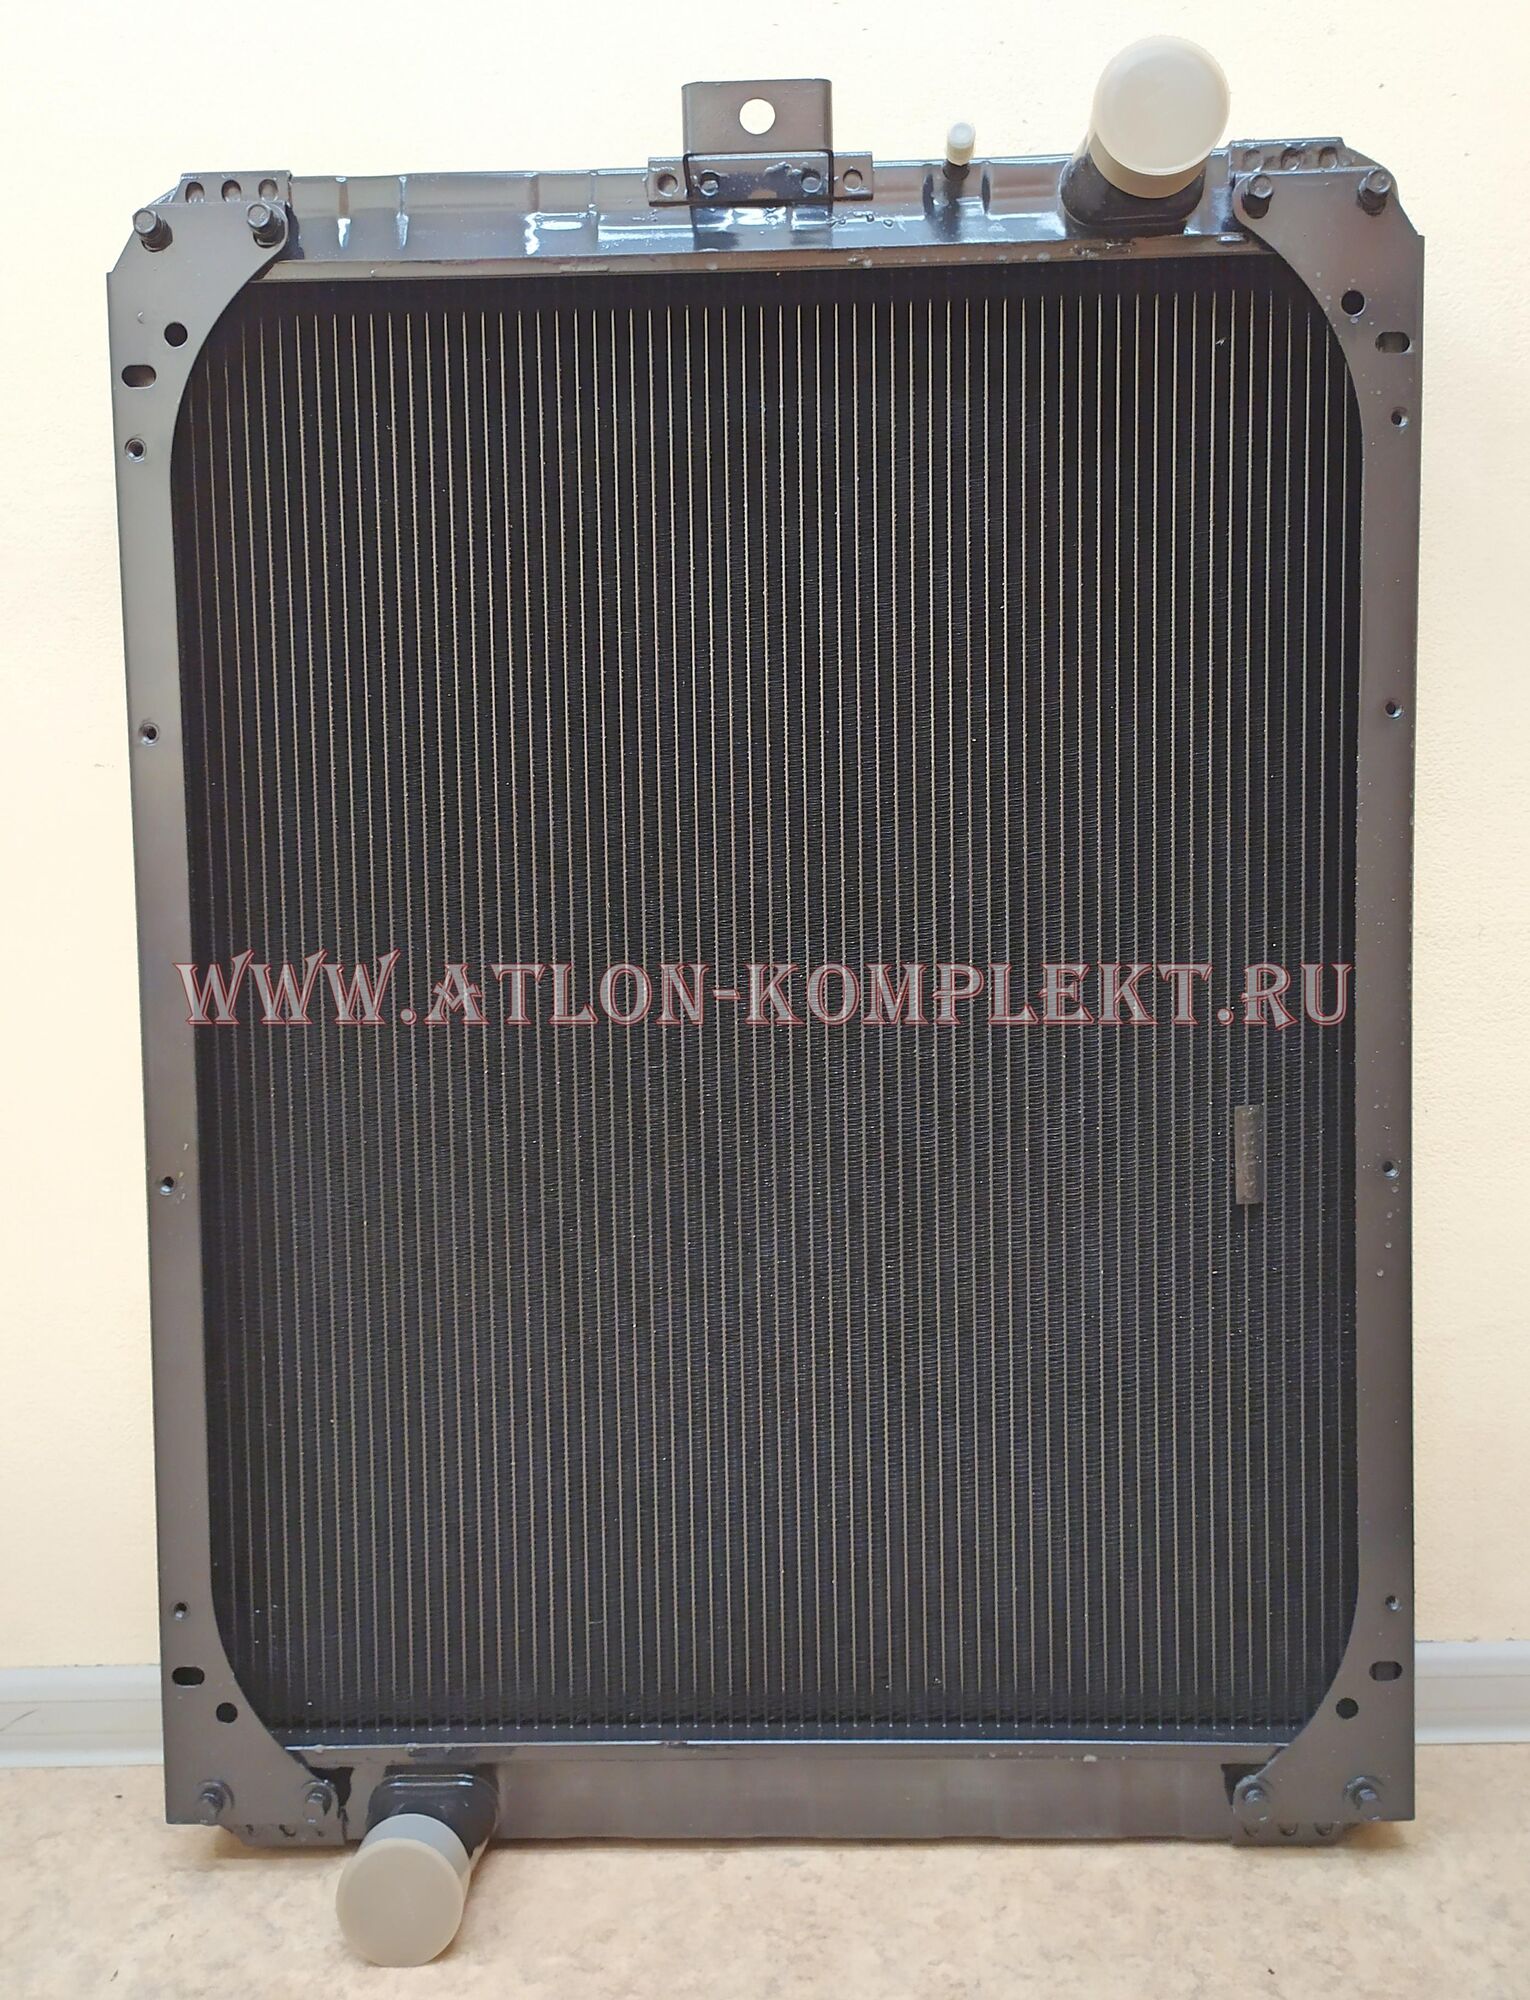 Радиатор для КАМАЗ-65115, -65111, -65116, -65117 медный 65115Ш-1301010-22 3-х рядный